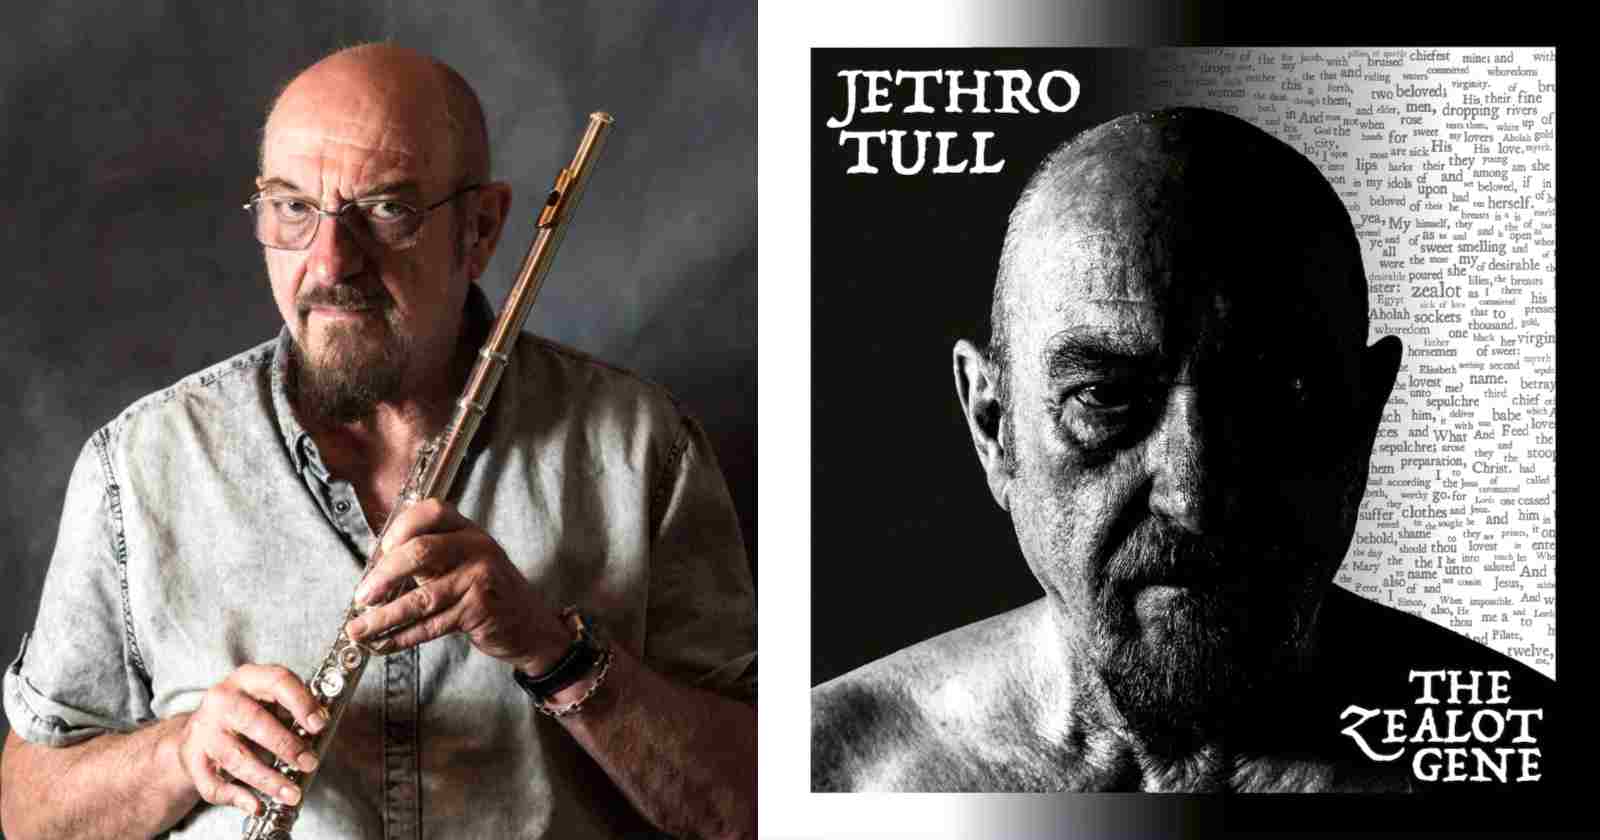 Jethro Tull releases first single of the album 'The Zealot Gene'